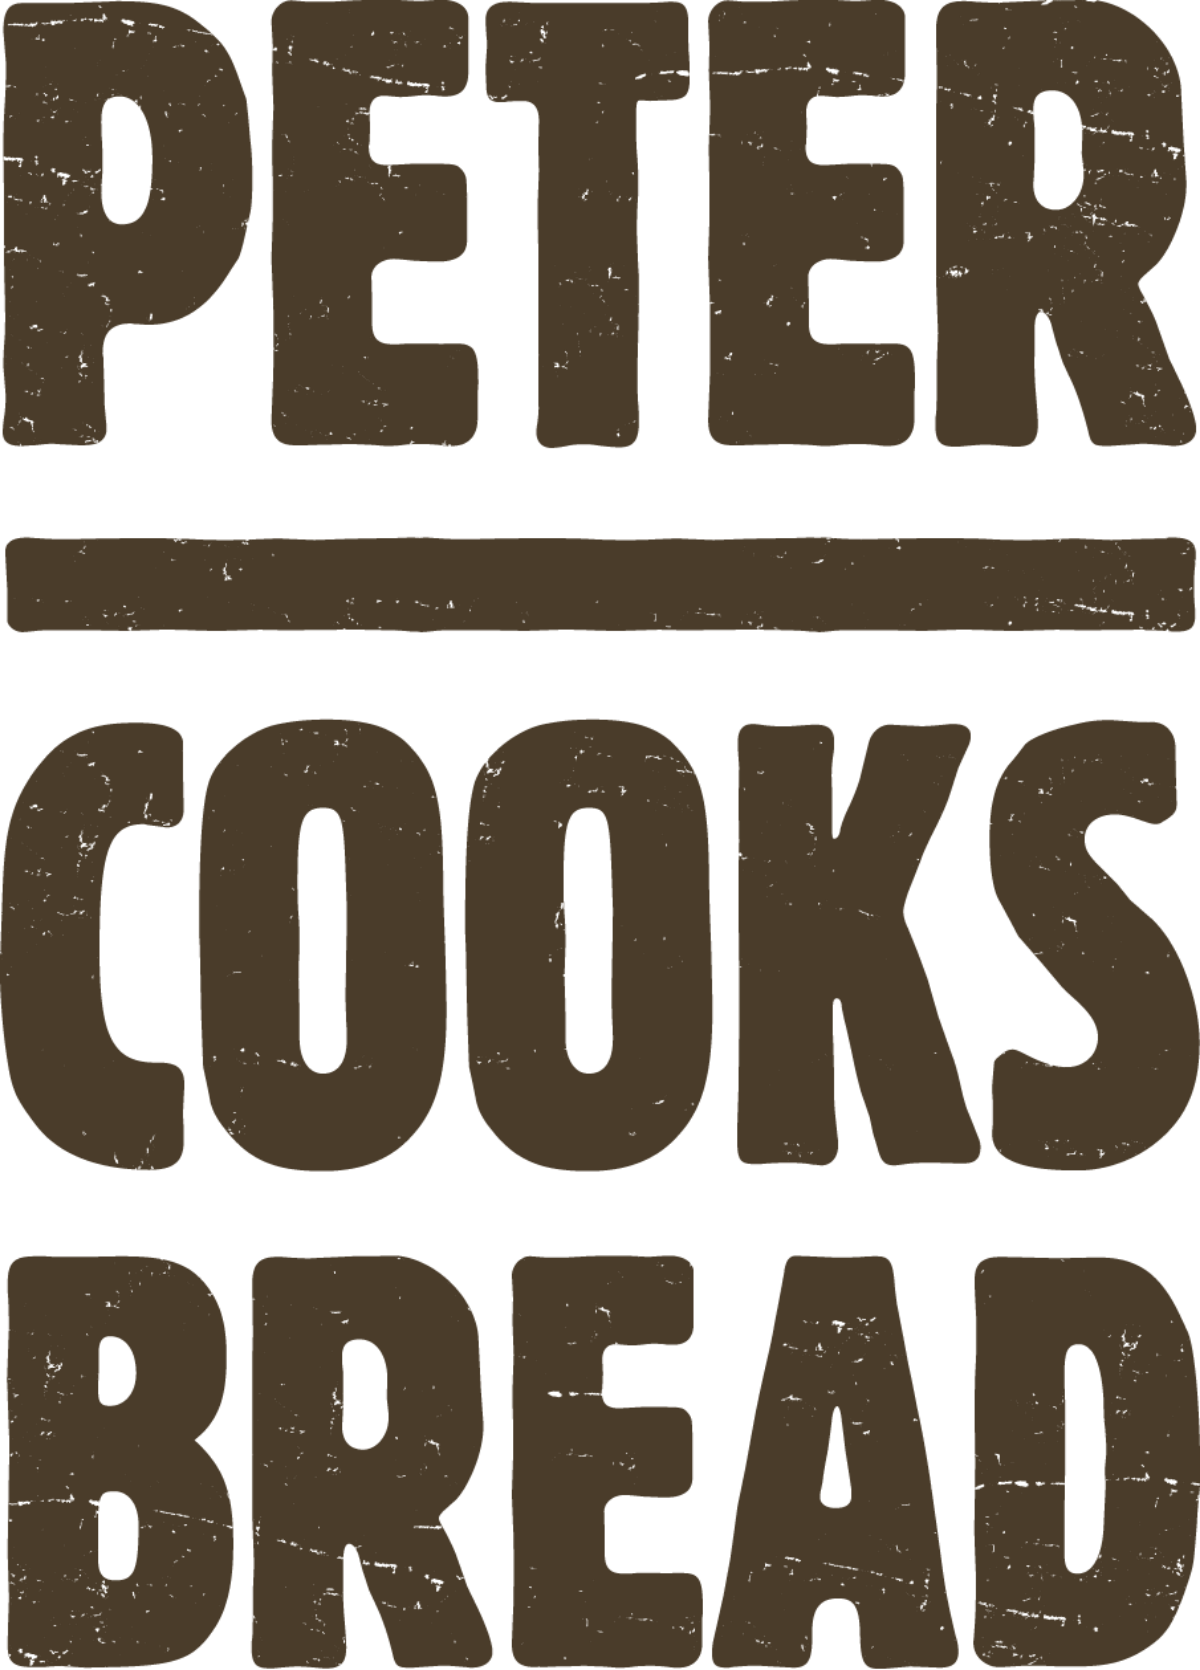 PETER COOKS BREAD